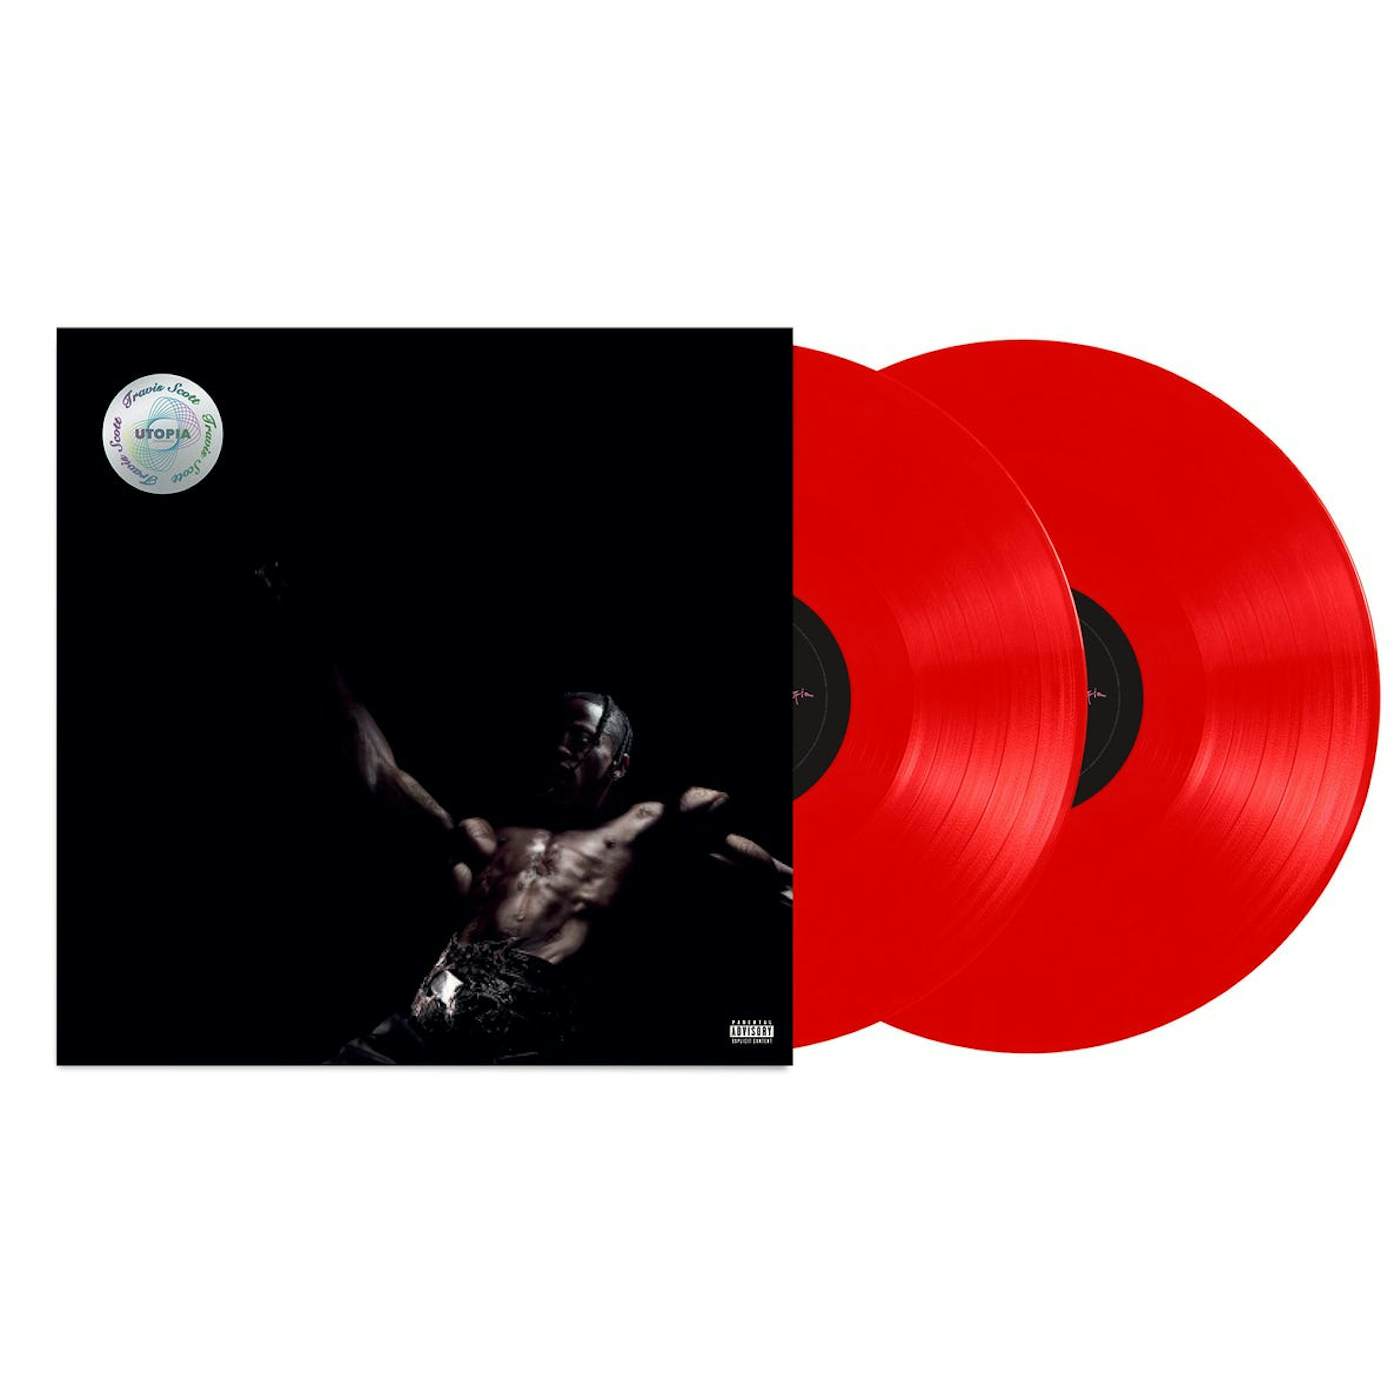 Kendrick Lamar GOOD KID, M.A.A.D CITY (10TH ANNIVERSARY EDITION) CD  $17.99$15.99